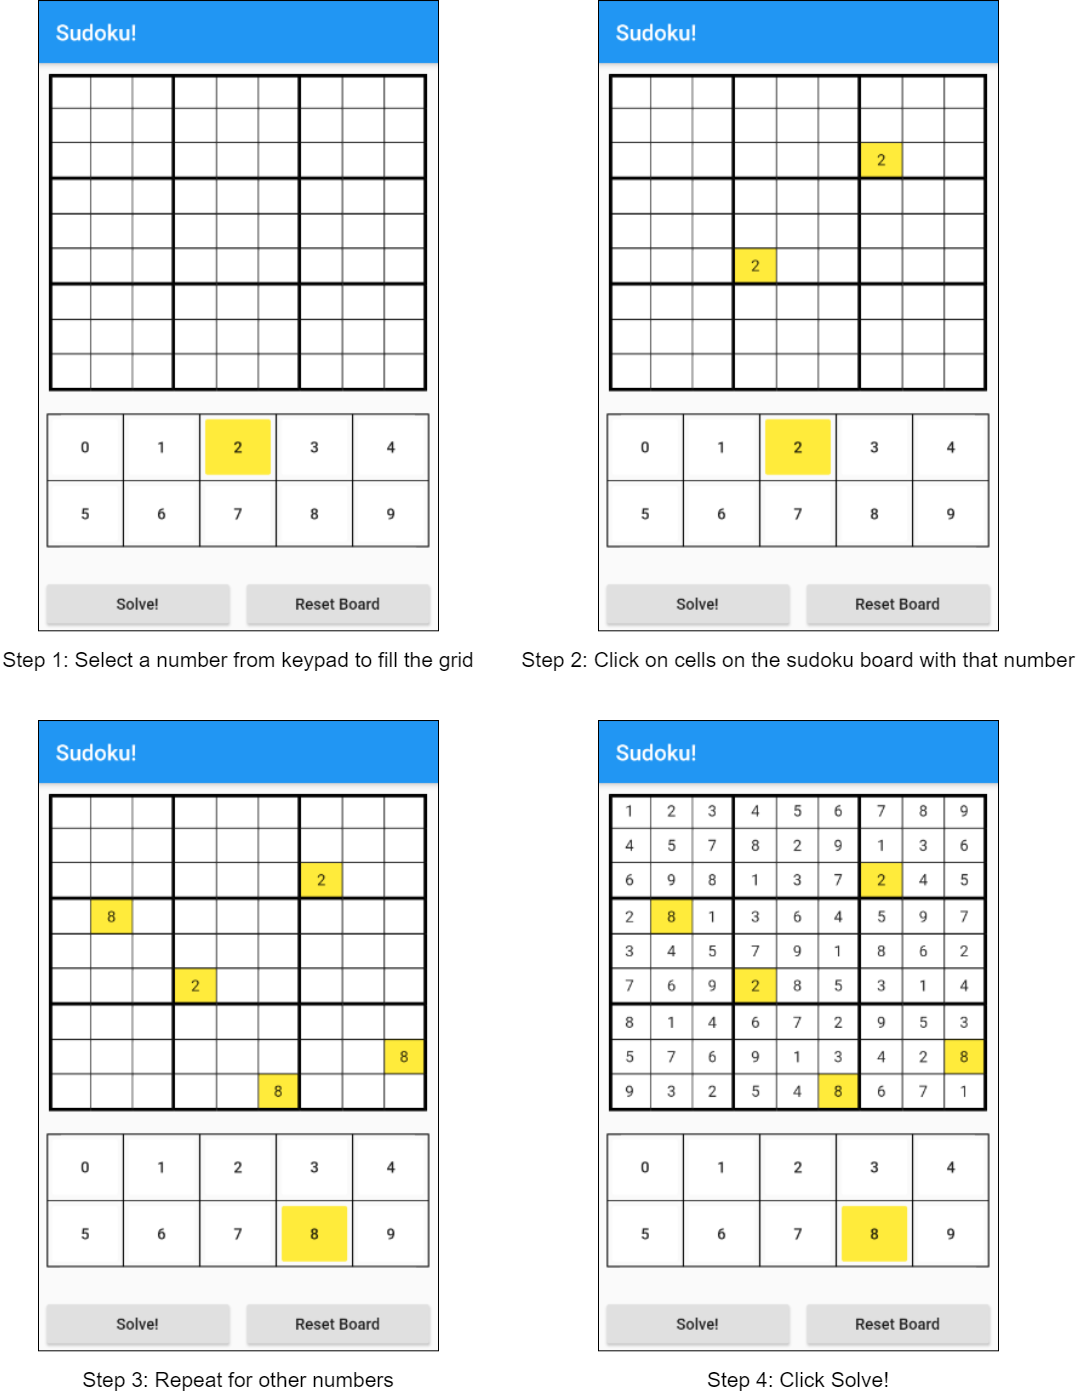 Sudoku Solver Flutter: Part 2, By Sietse Voort, 30.01.2023